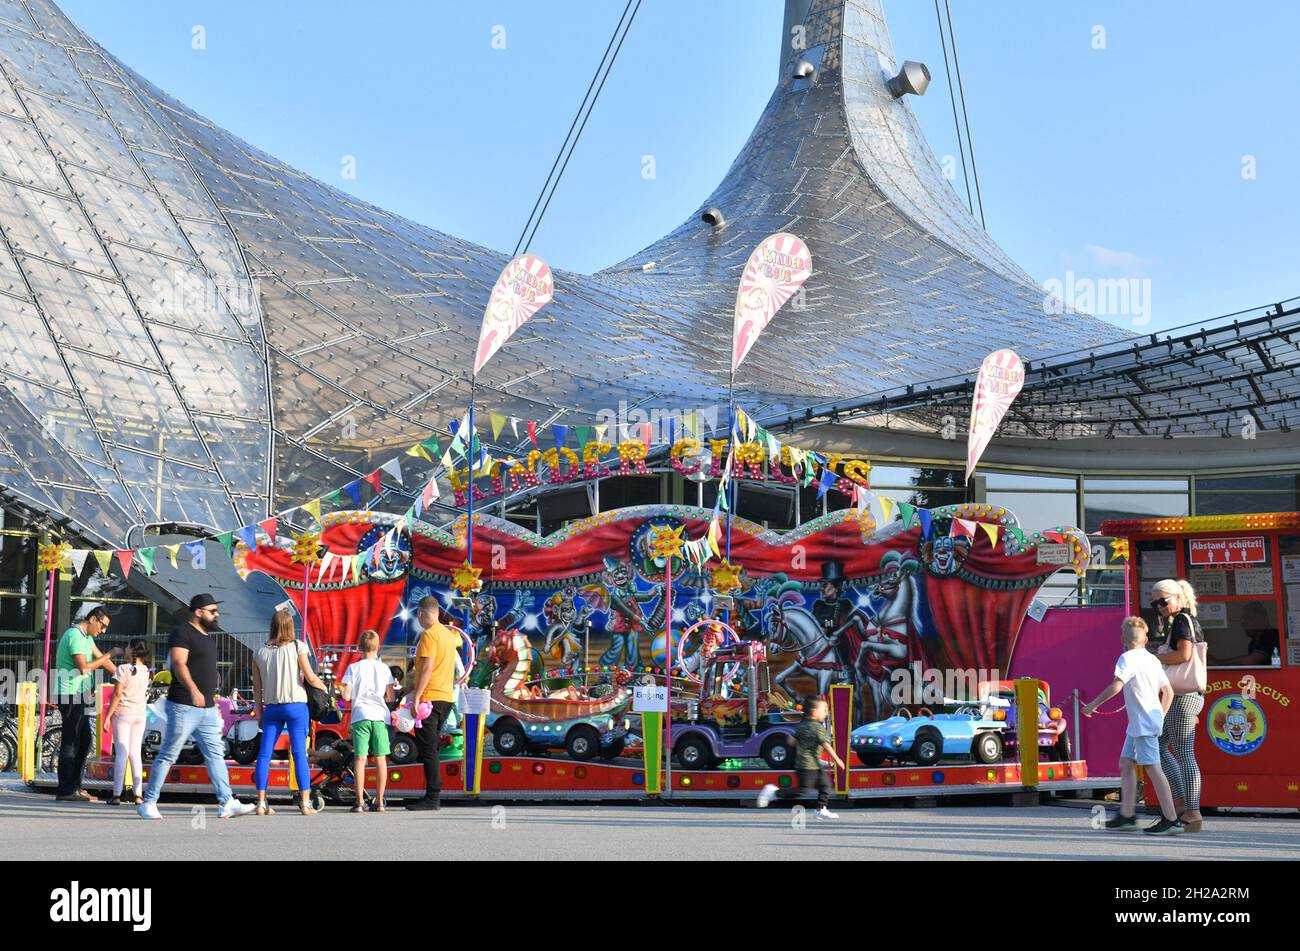 Kinderkarussell im Olympiapark München in der Reihe 'Sammer in der Stadt' anstatt des abgesagten Oktoberfestes - Carosello per bambini nell'Oly di Monaco Foto Stock